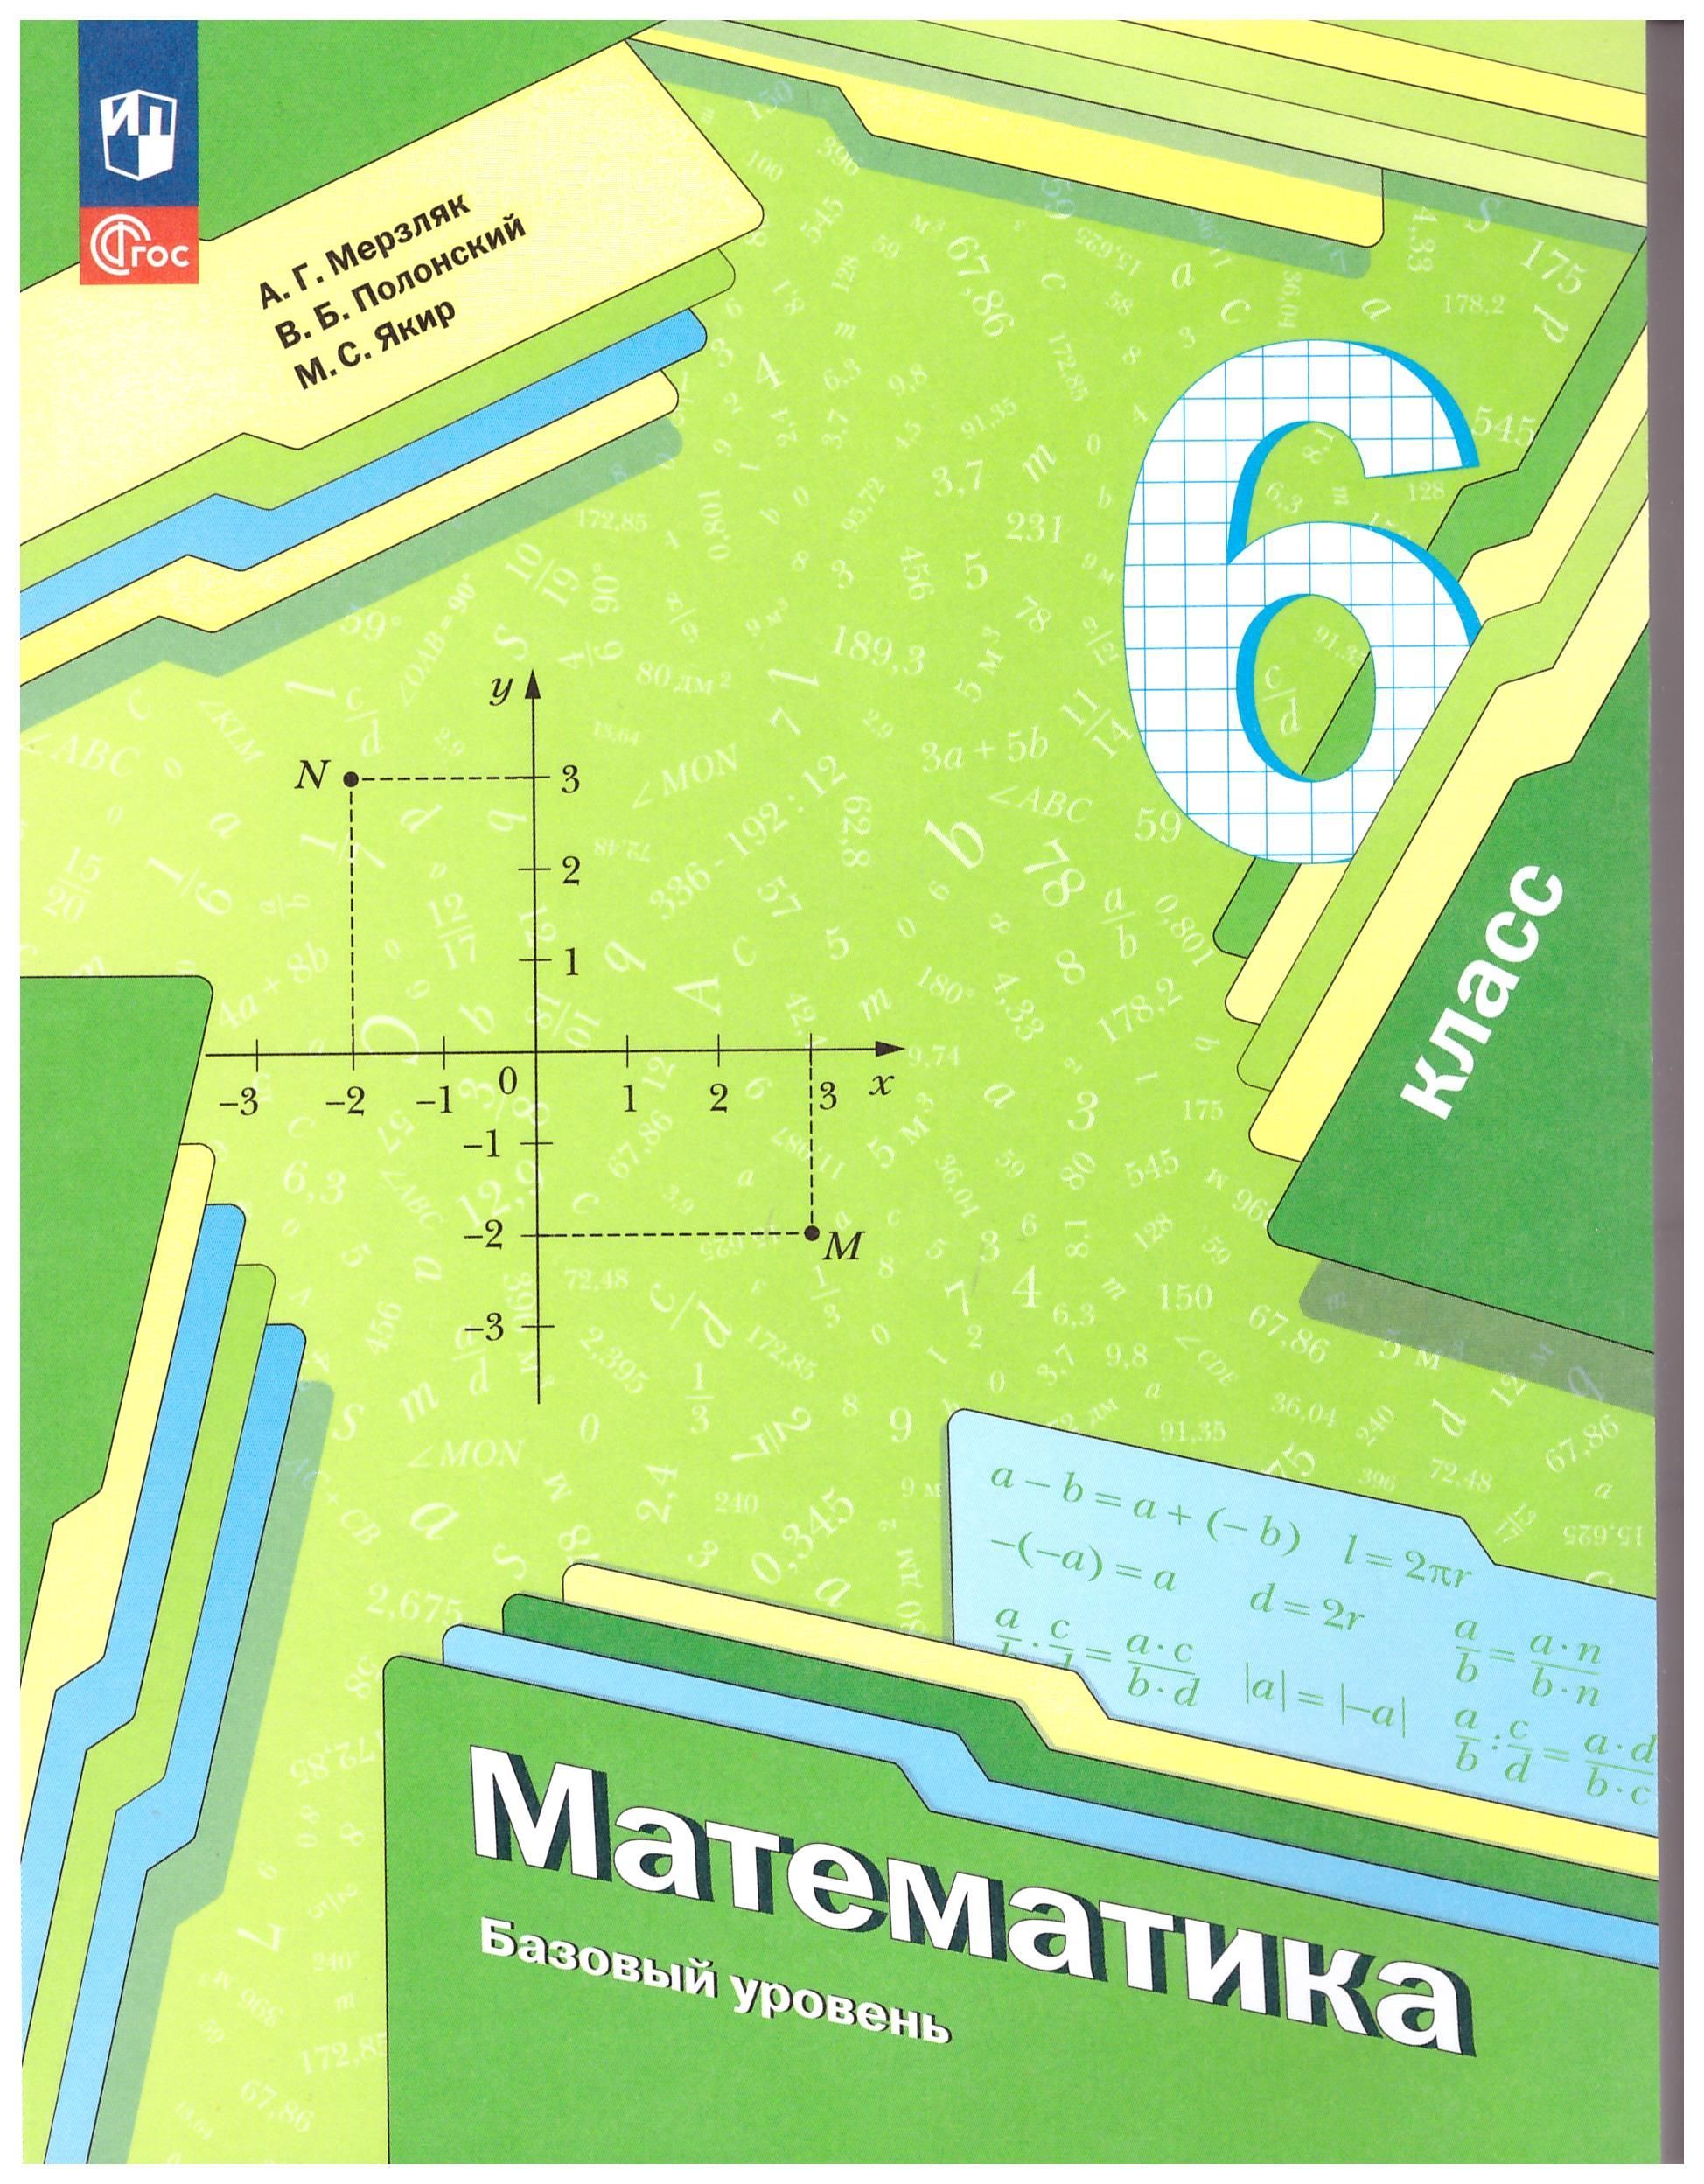 Математика 6 класс стр 113. Математика 6 класс Мерзляк. Учебник по математике 6 класс Мерзляк обложка. Учебник учебник математики 6 класс Мерзляк.